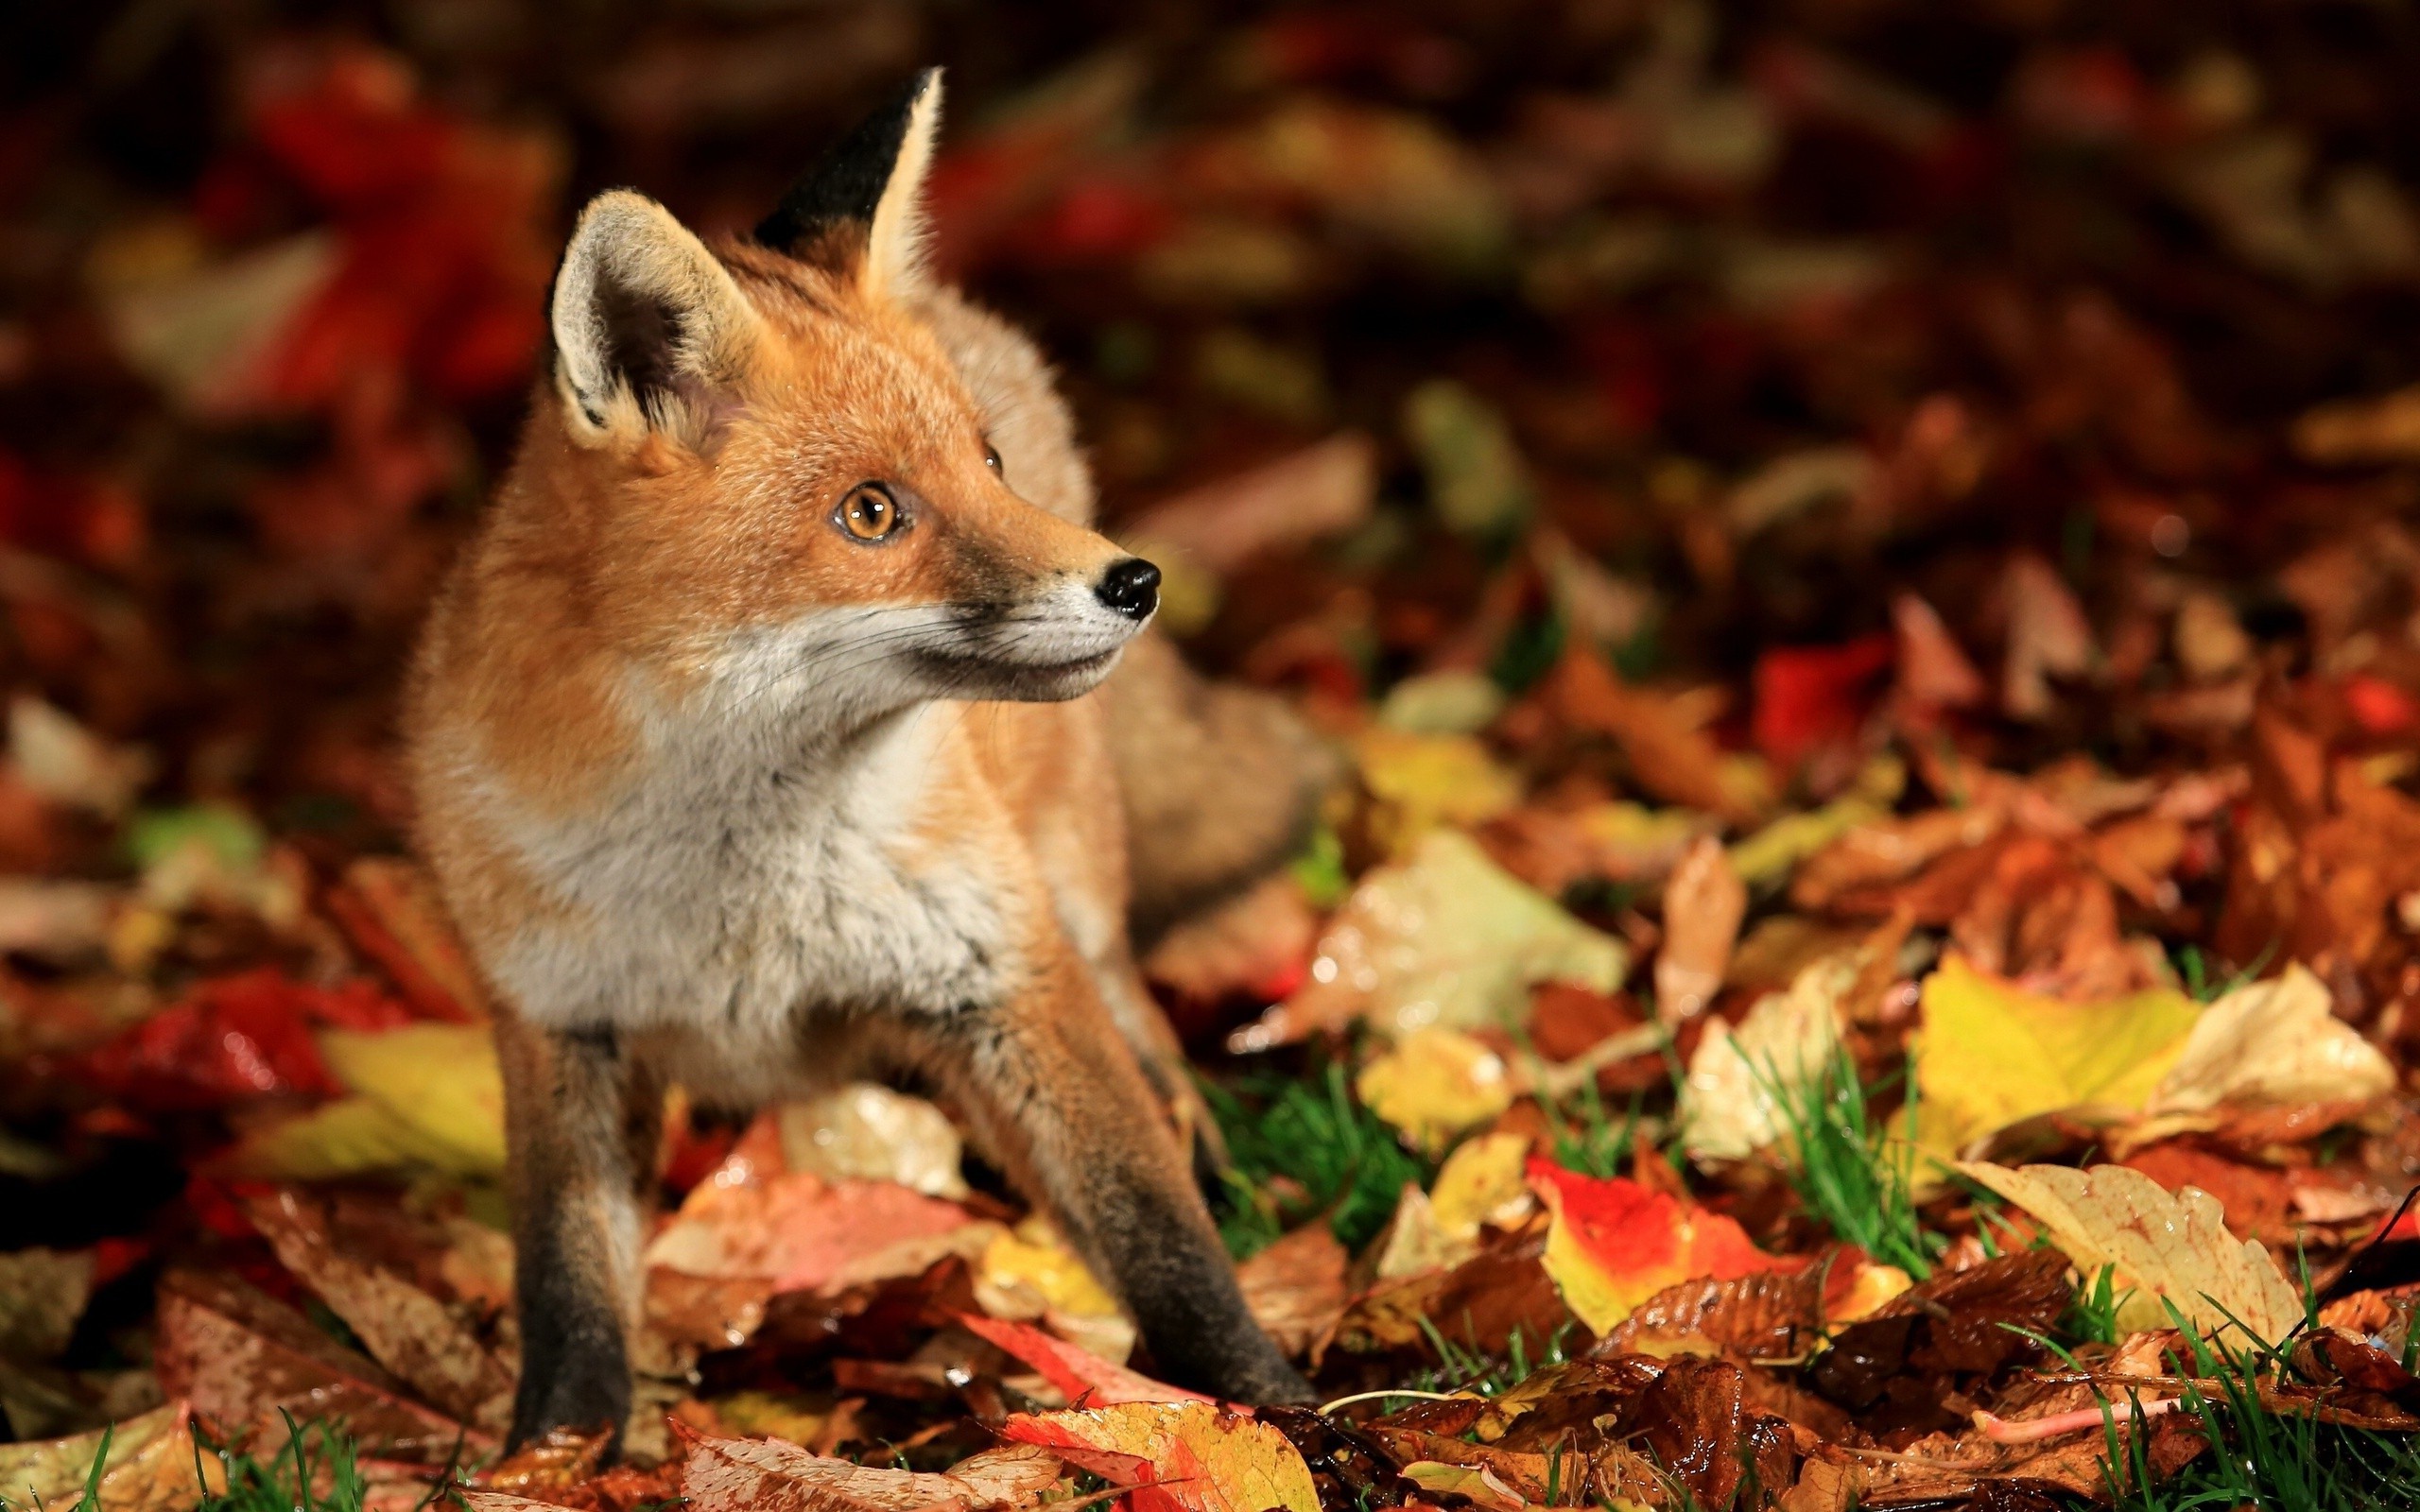 Fall Fox Wallpapers